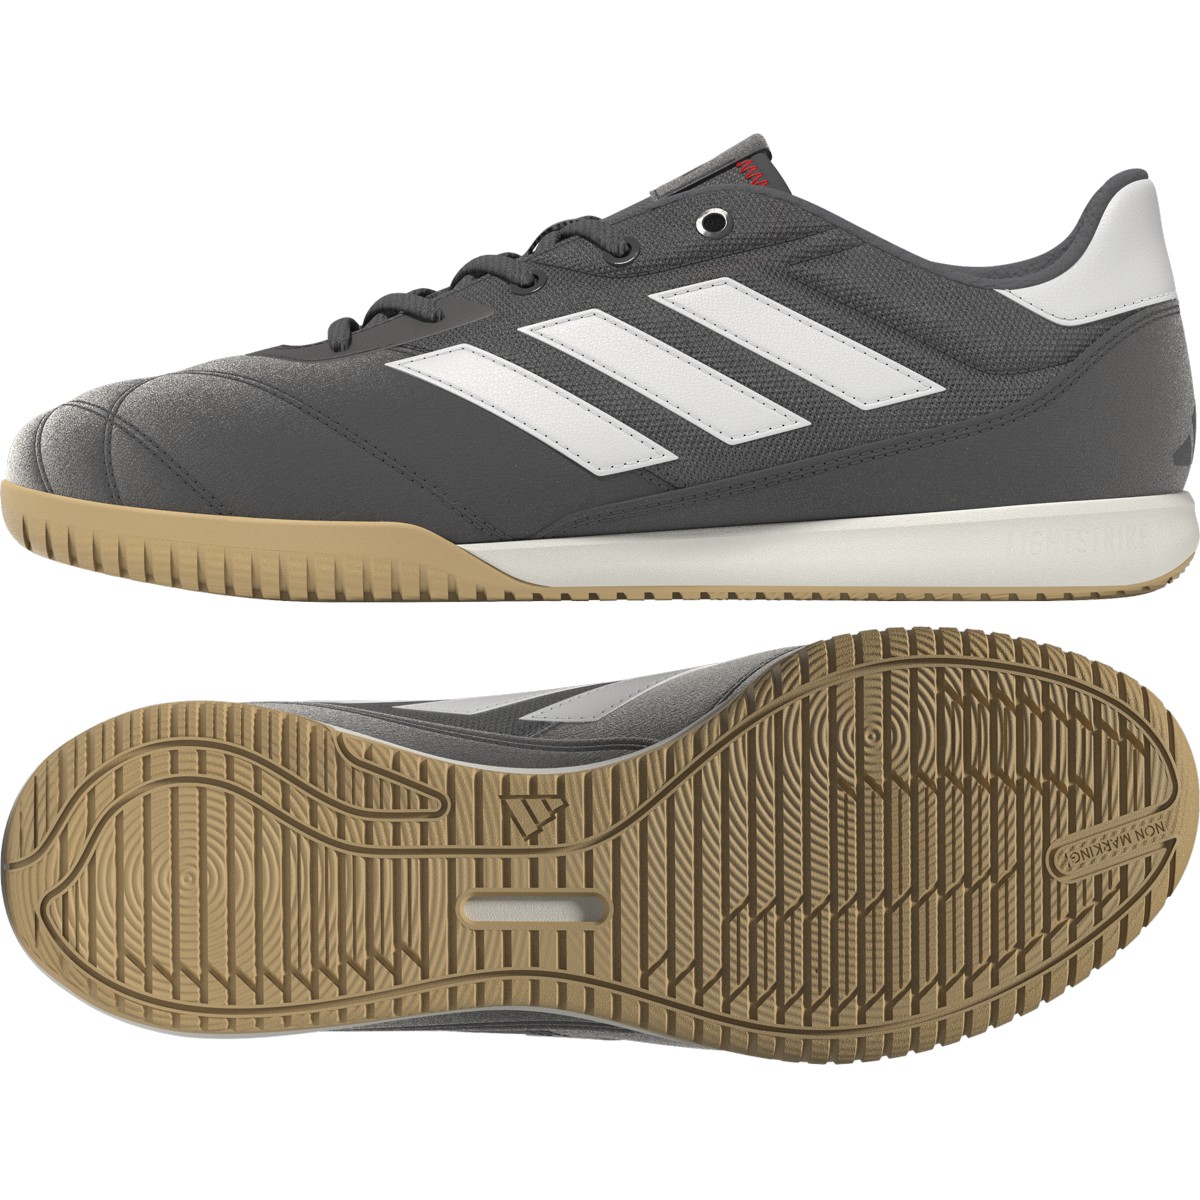 adidas Copa Gloro Indoor Soccer Shoes - Grey/White USA